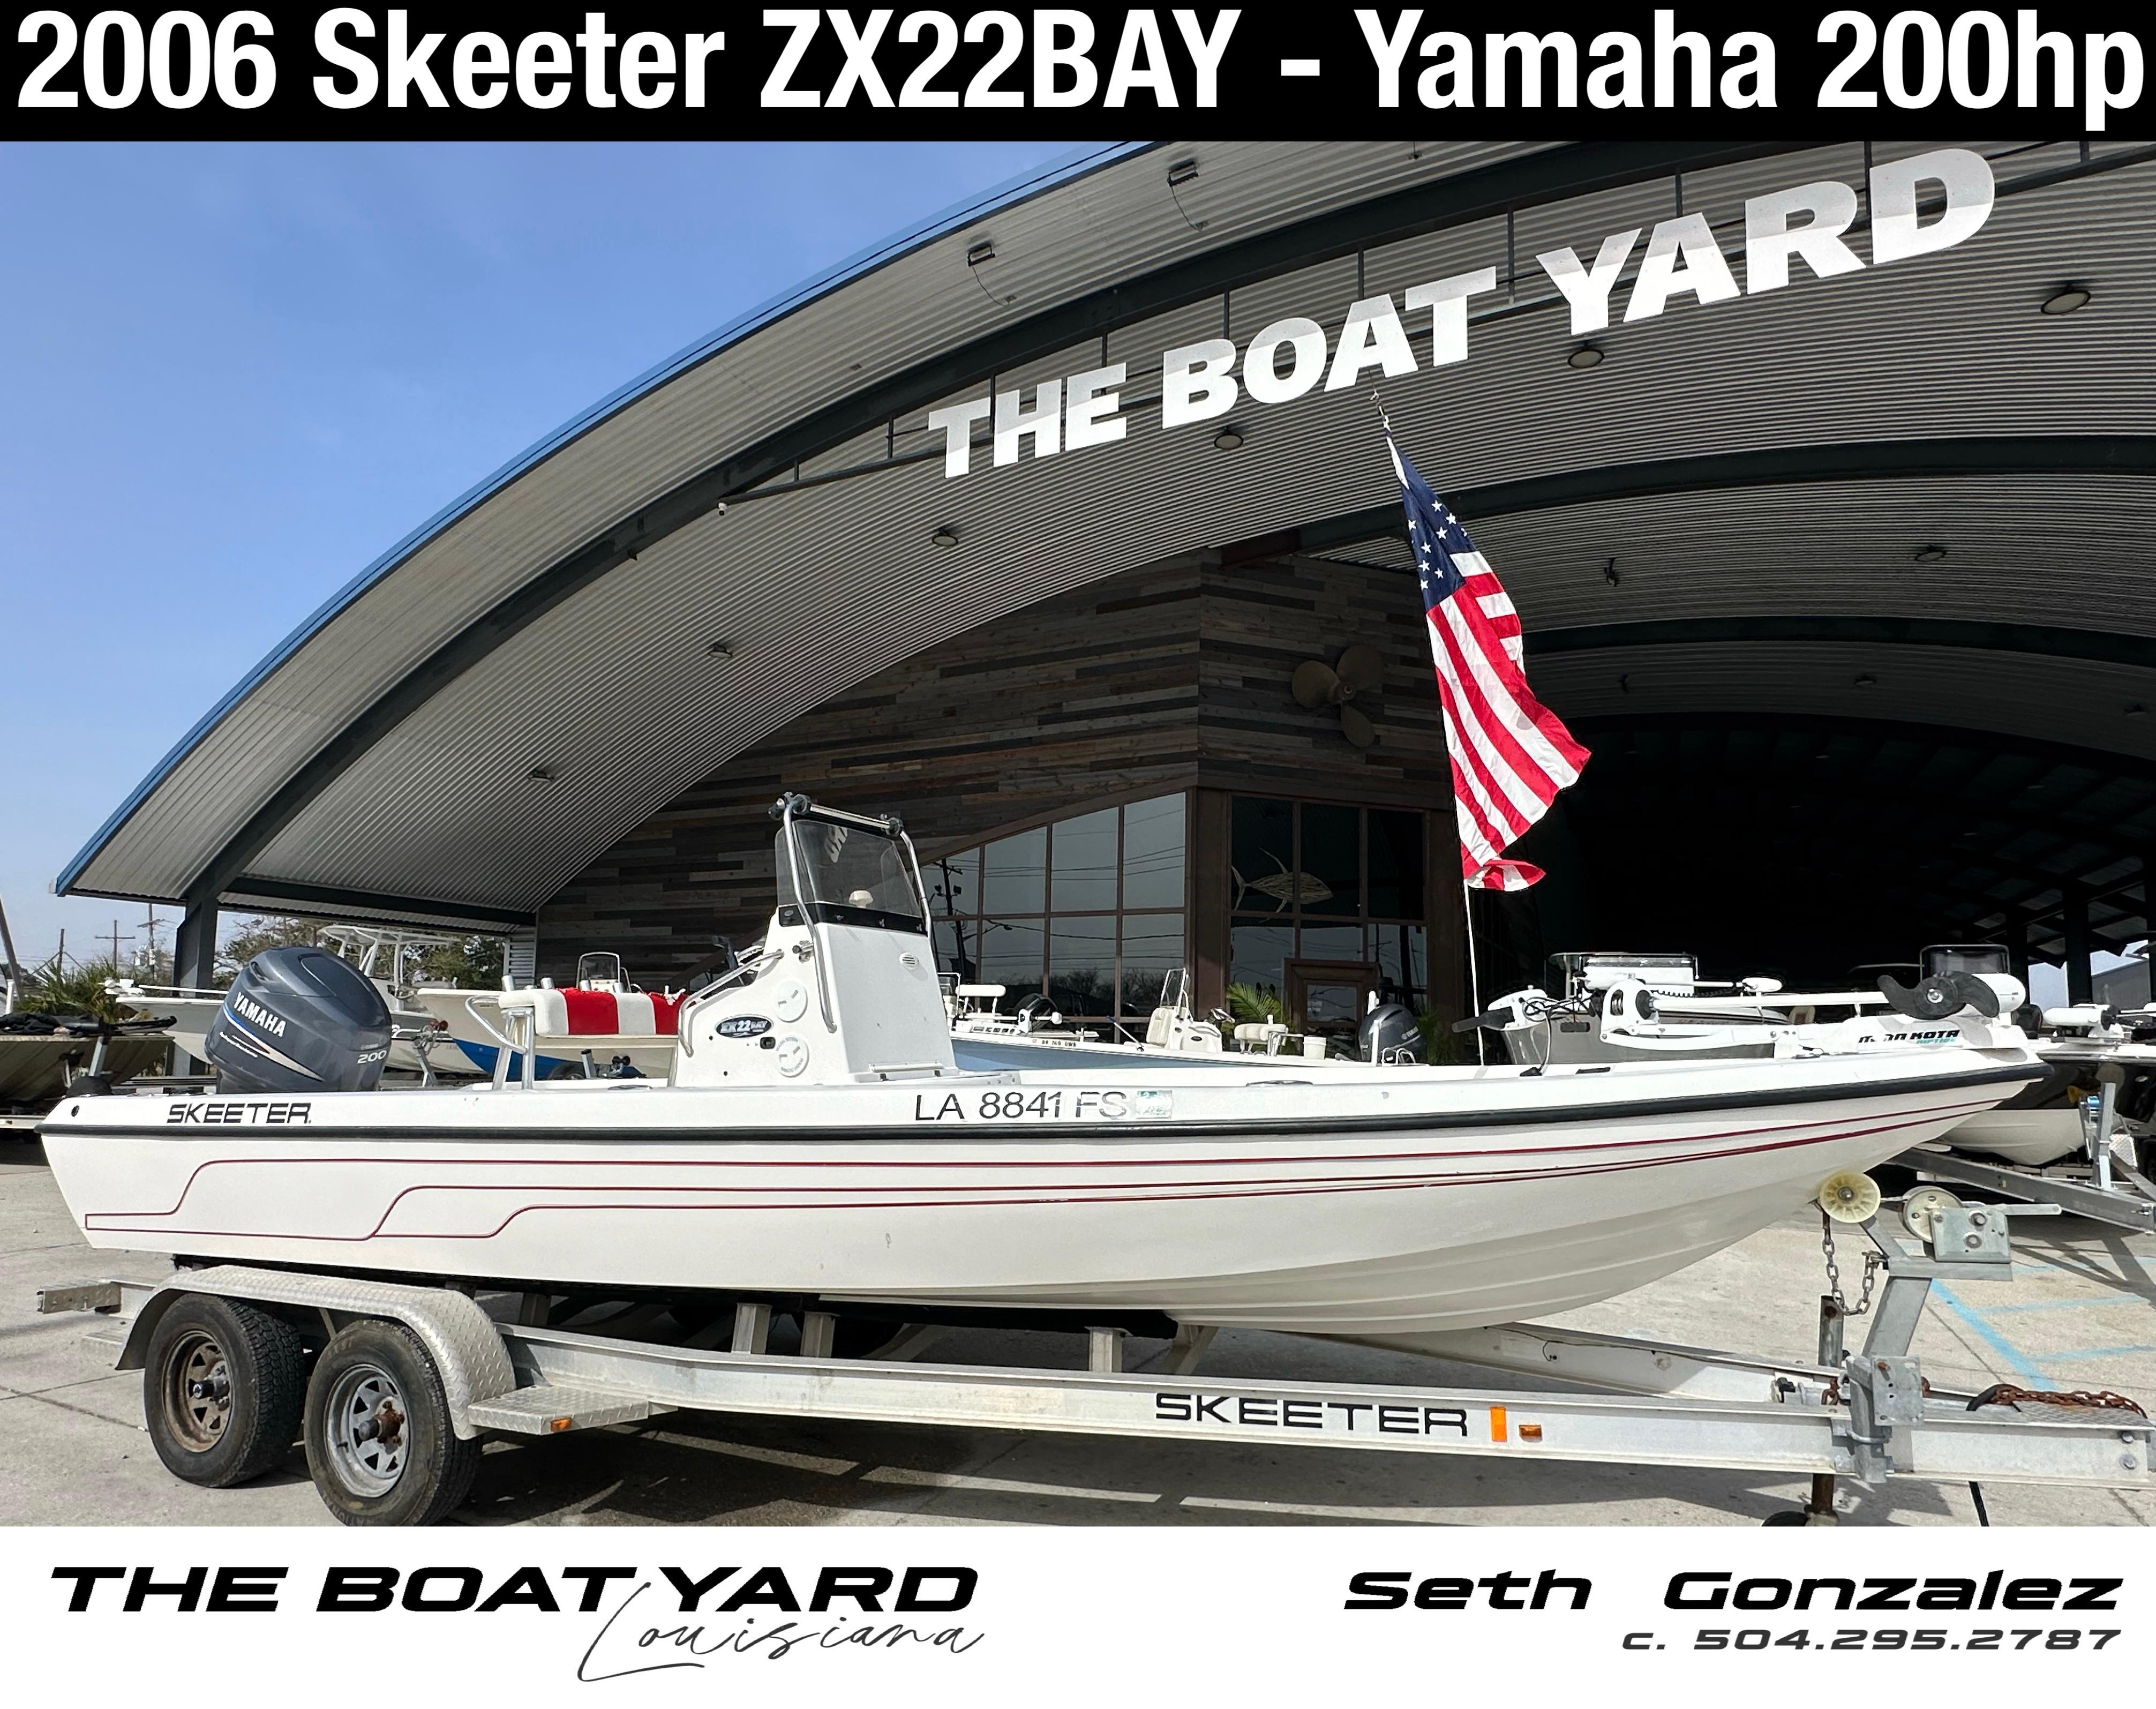 Skeeter 22 Zx boats for sale - Boat Trader